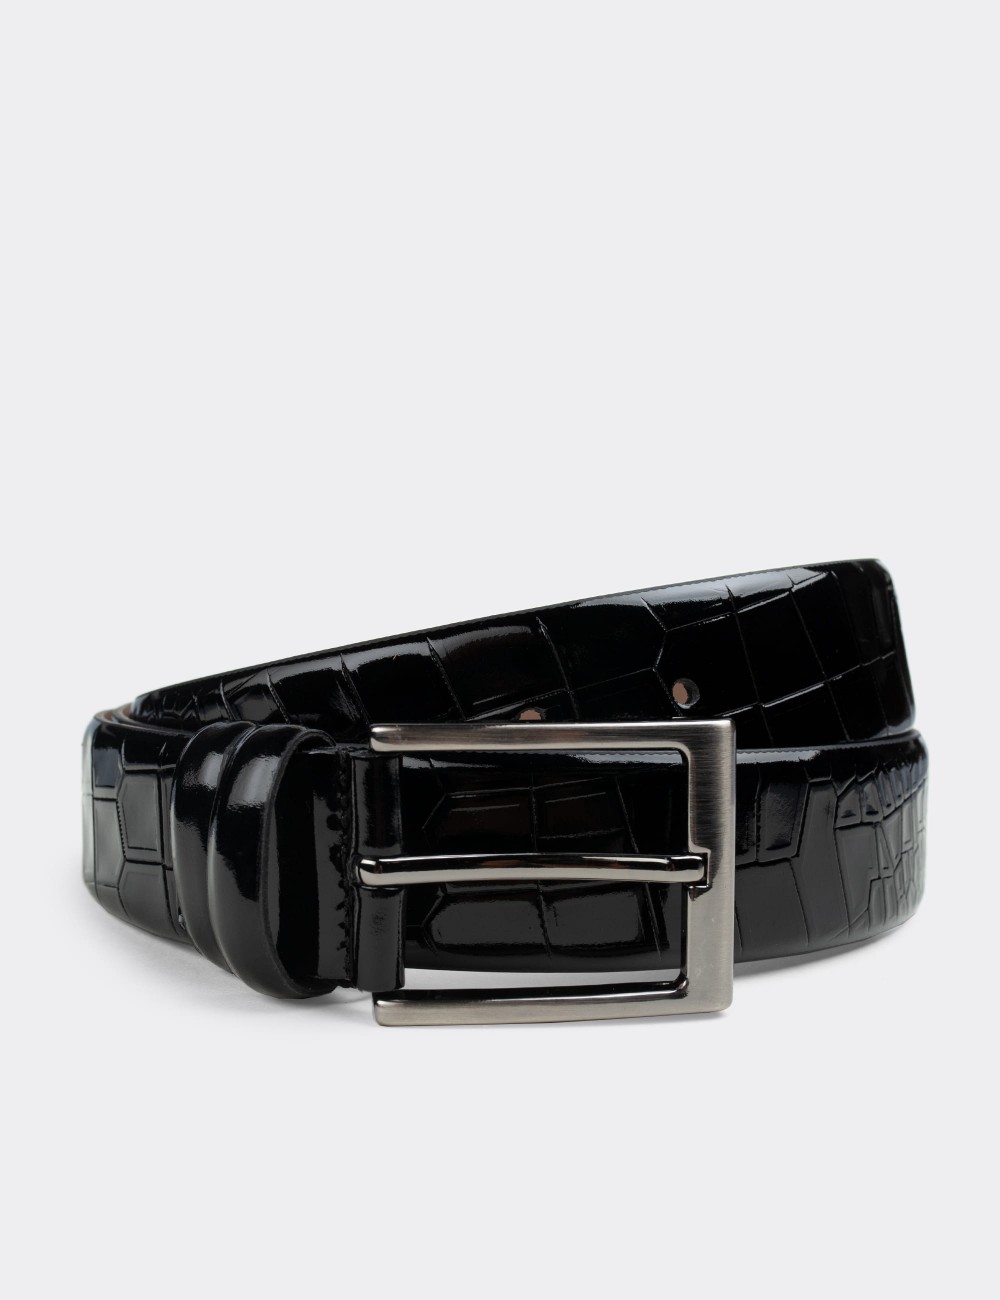 Patent Leather Black Men's Belt - K0103MSYHW02